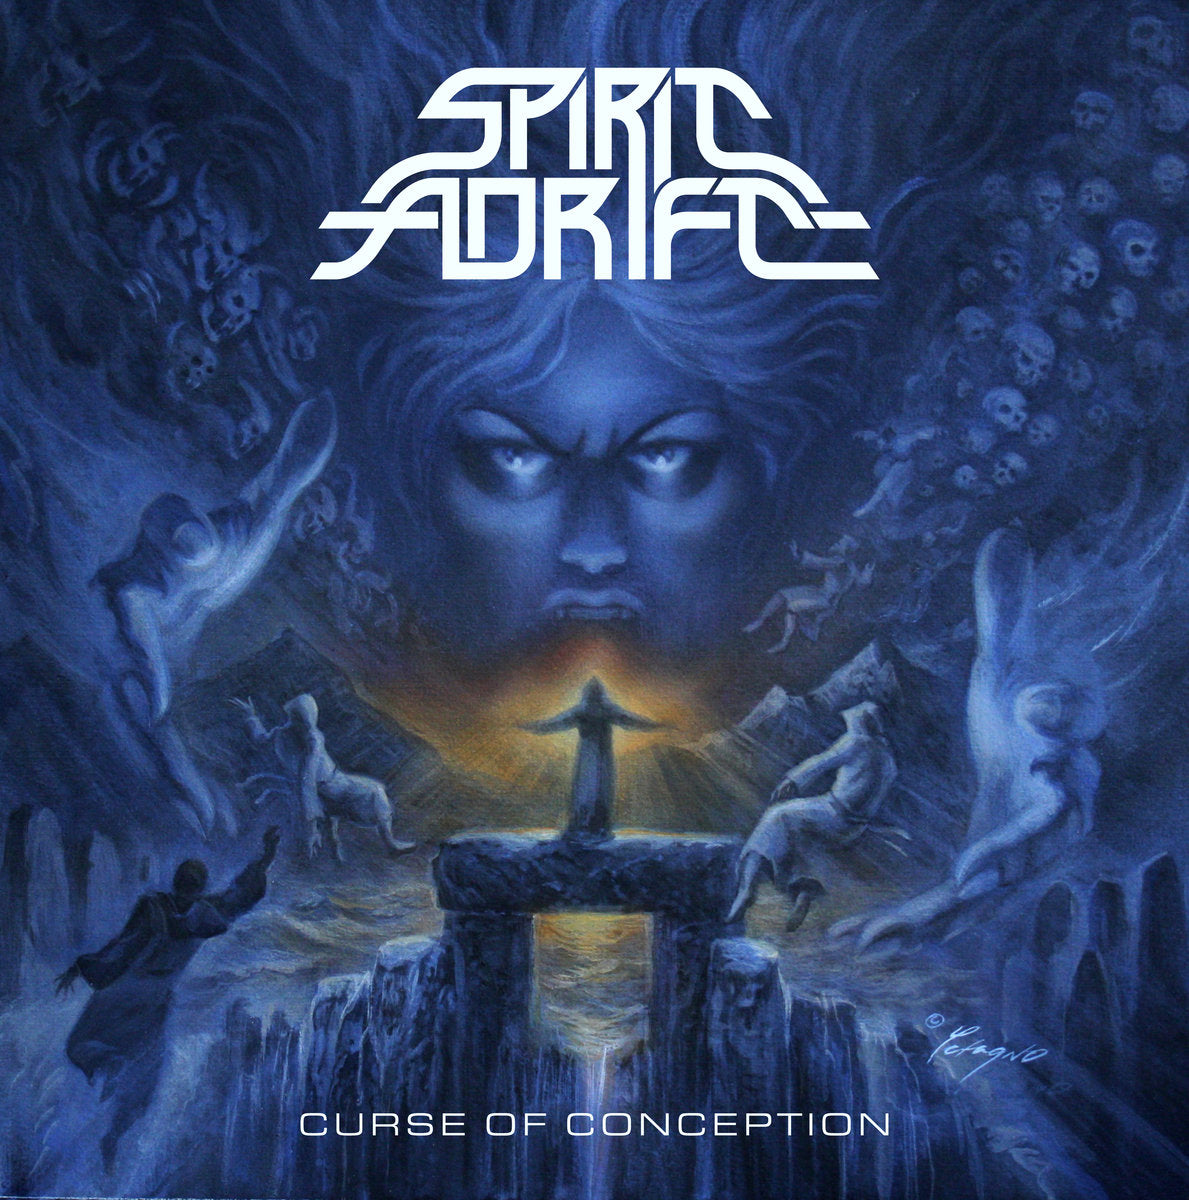 SPIRIT ADRIFT "Curse of Conception" CD